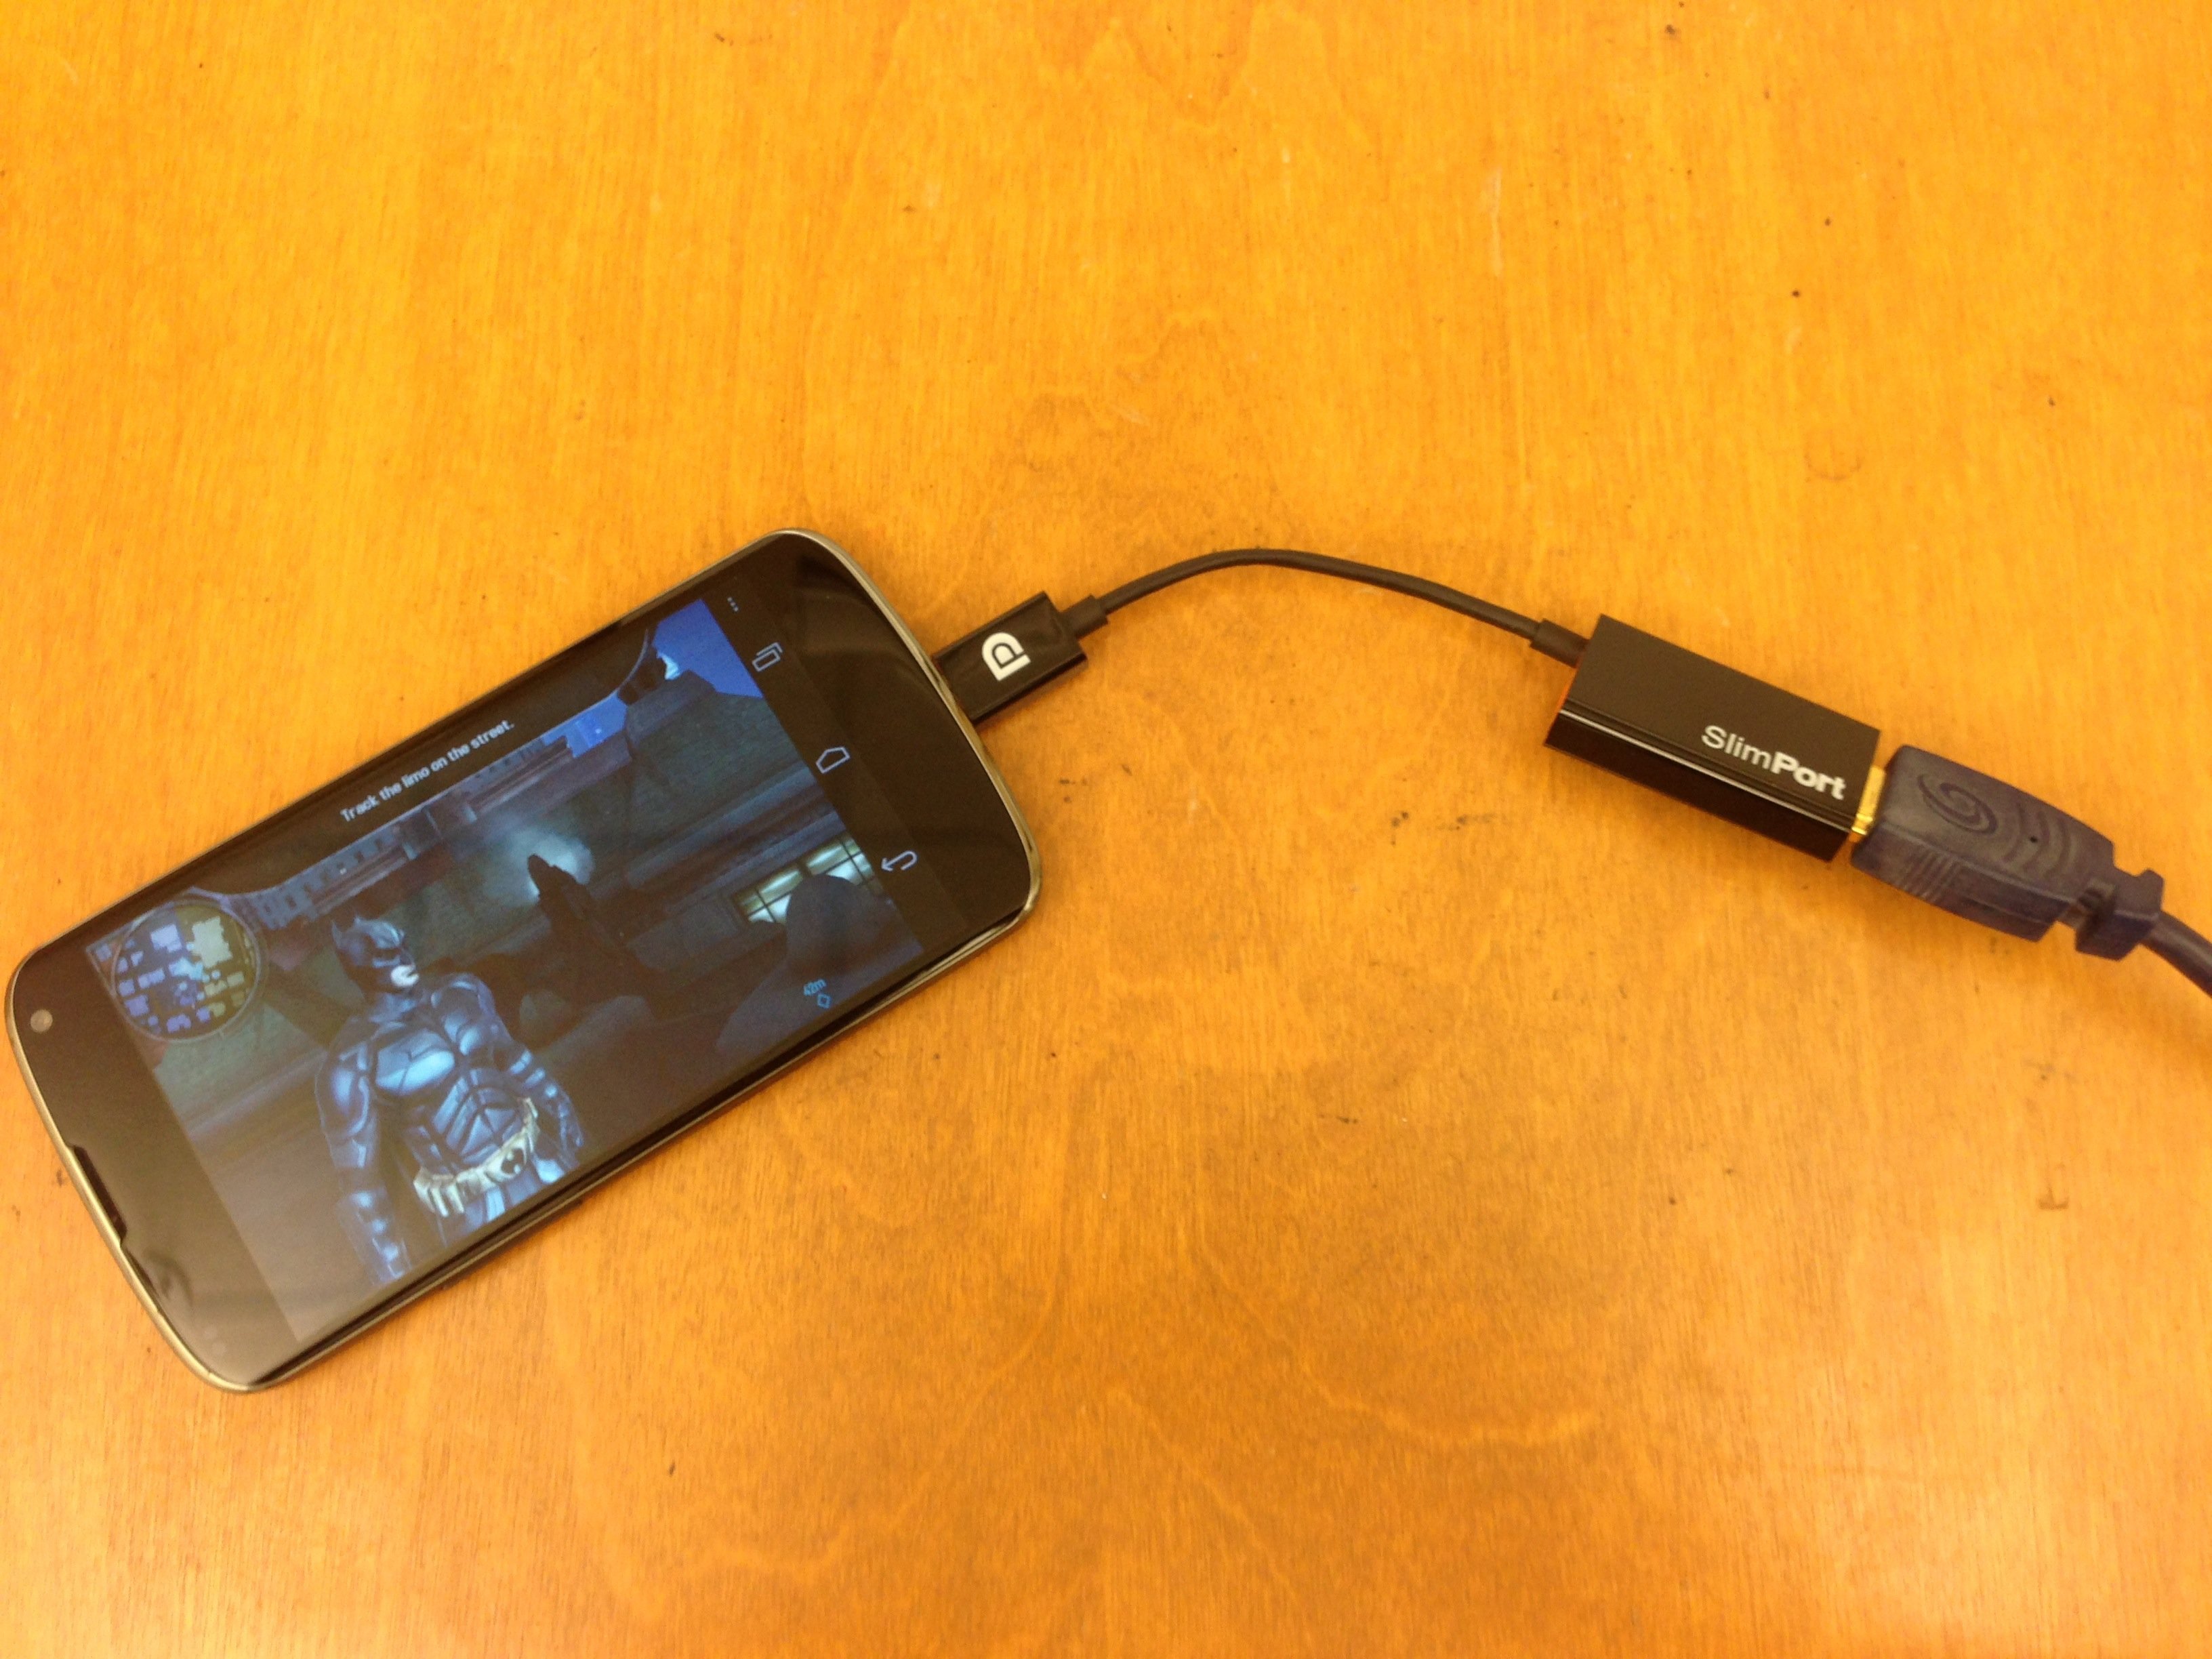 Nexus 4 Slimport HDMI Adapter Review - 5